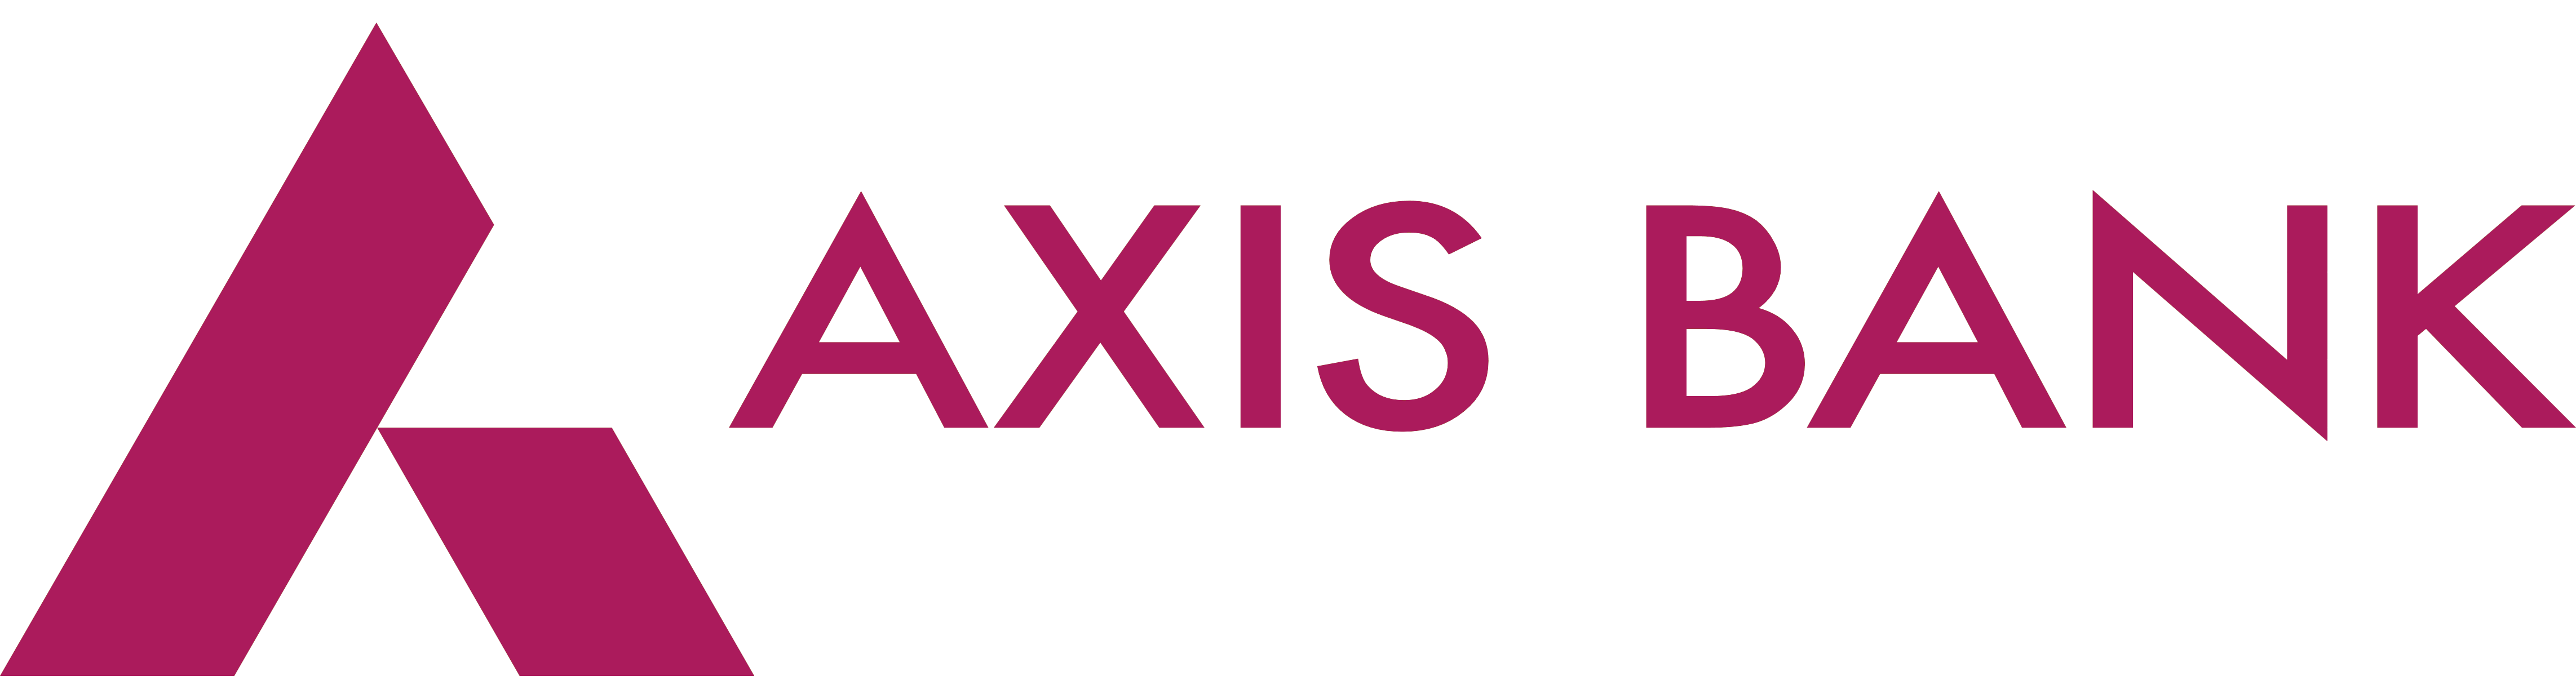 Axis-Bank.png